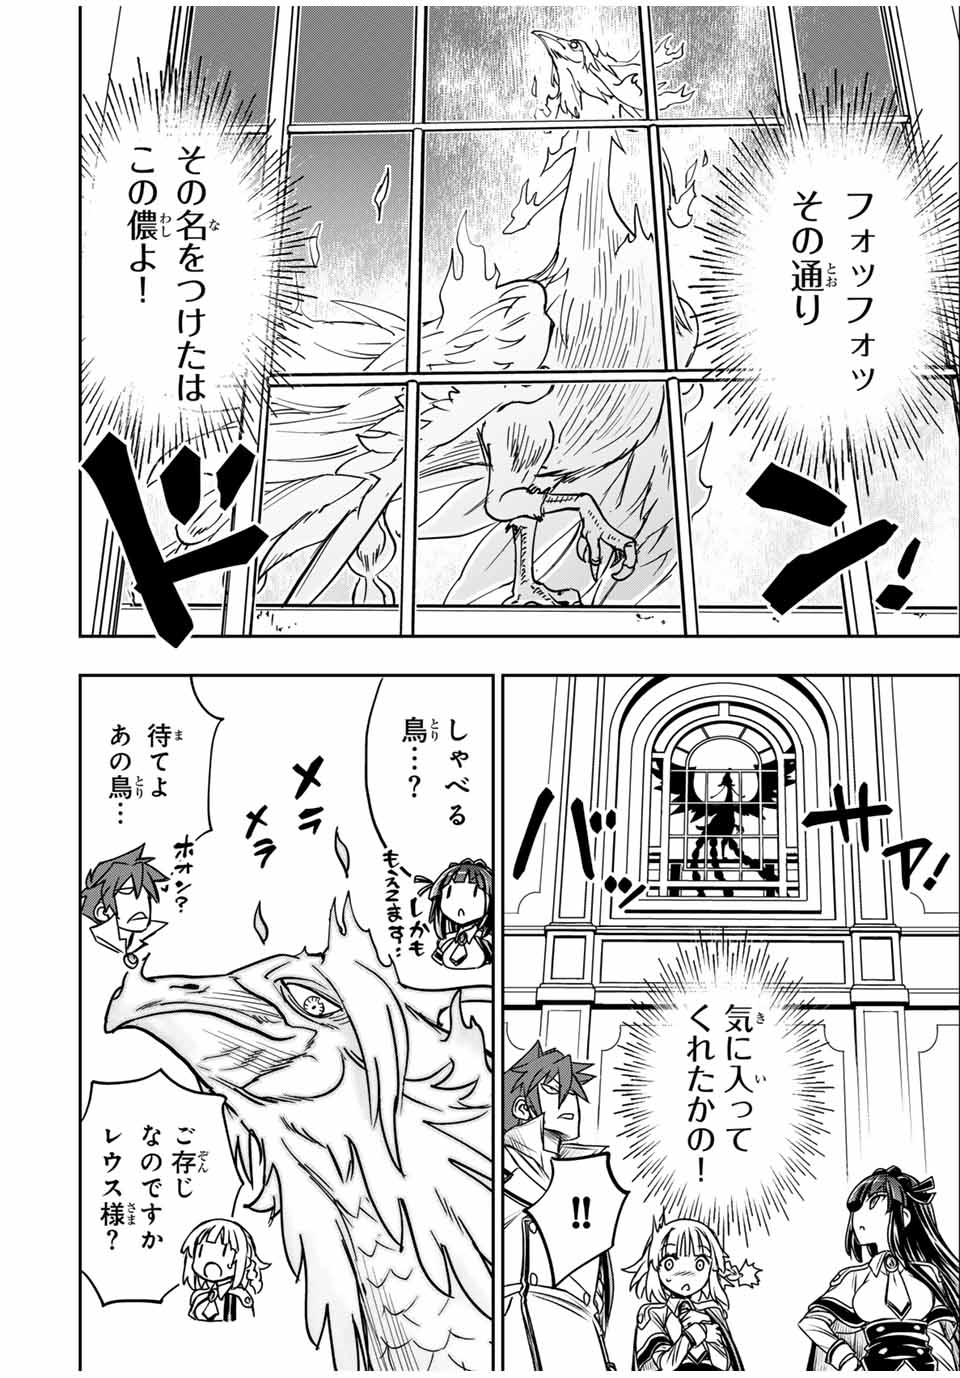 Nengan no Akuyaku Reijou (Last Boss) no Karada wo Teniiretazo!  - Chapter 24 - Page 12